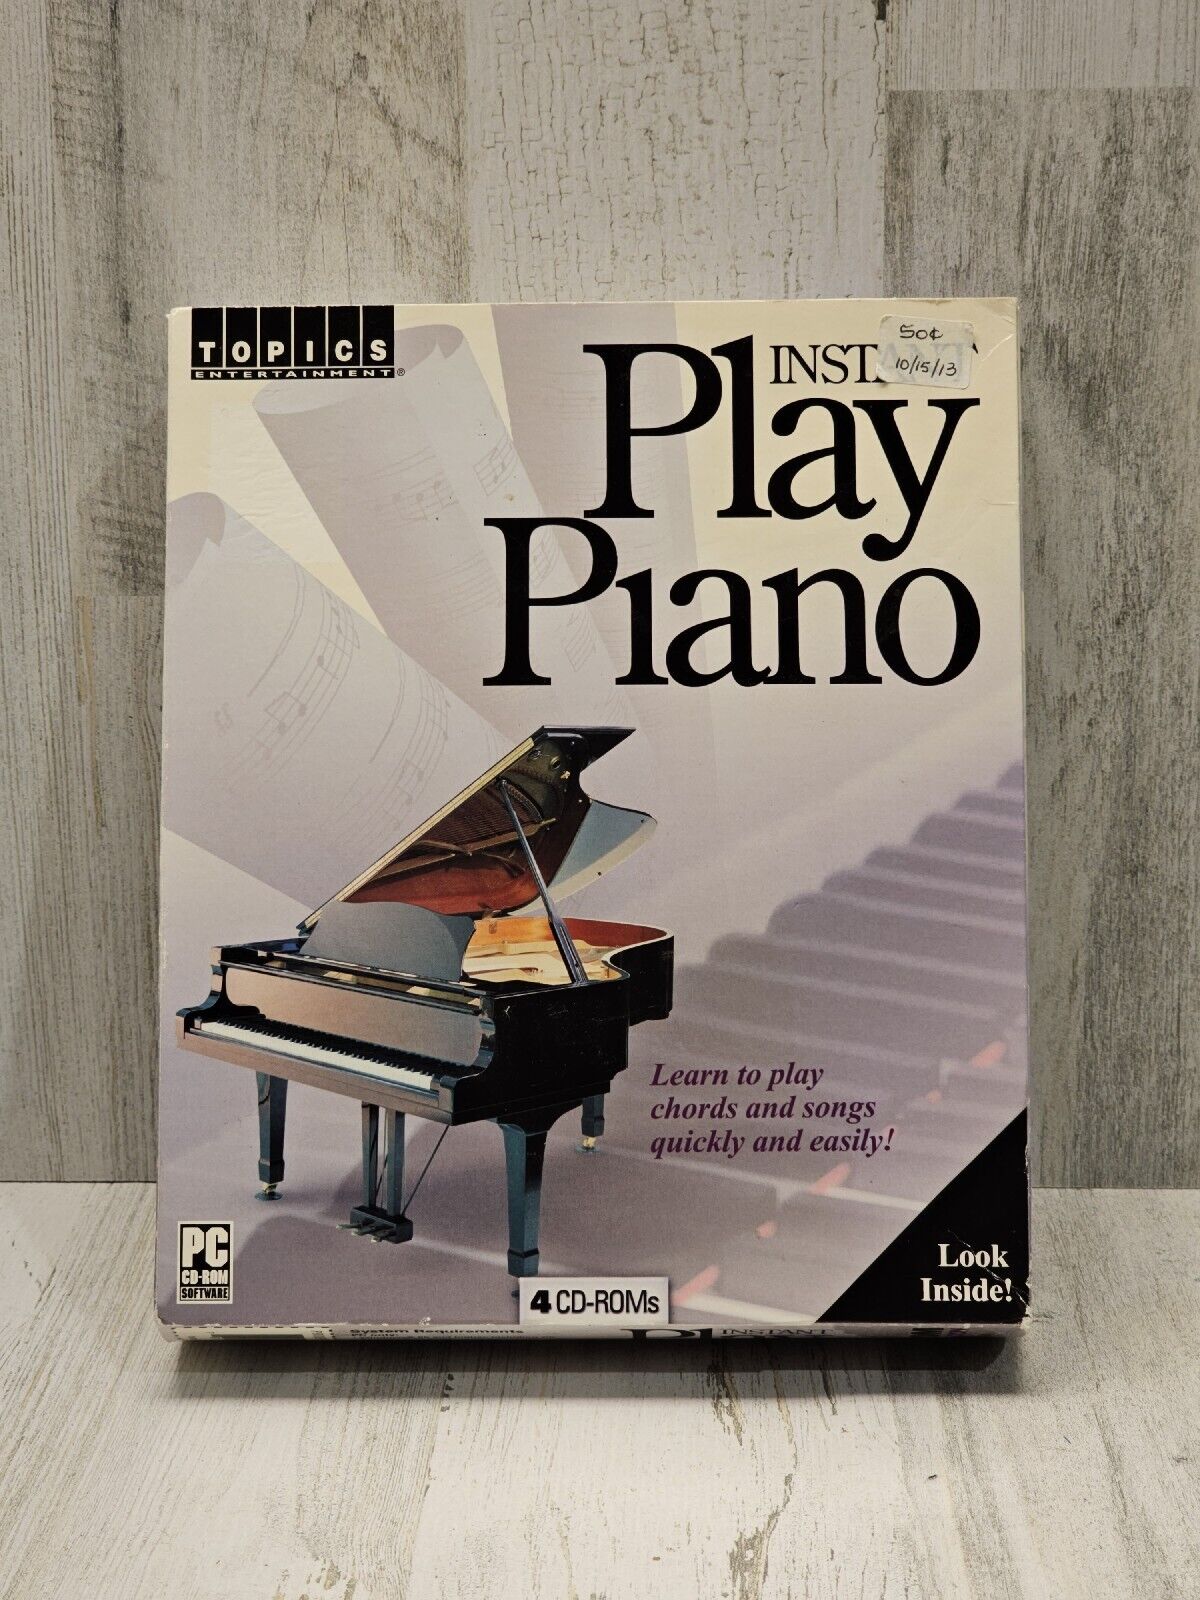 Instant Play Piano by Topics Entertainment CS-394S 4 CD-ROM Box Set PC Open Box